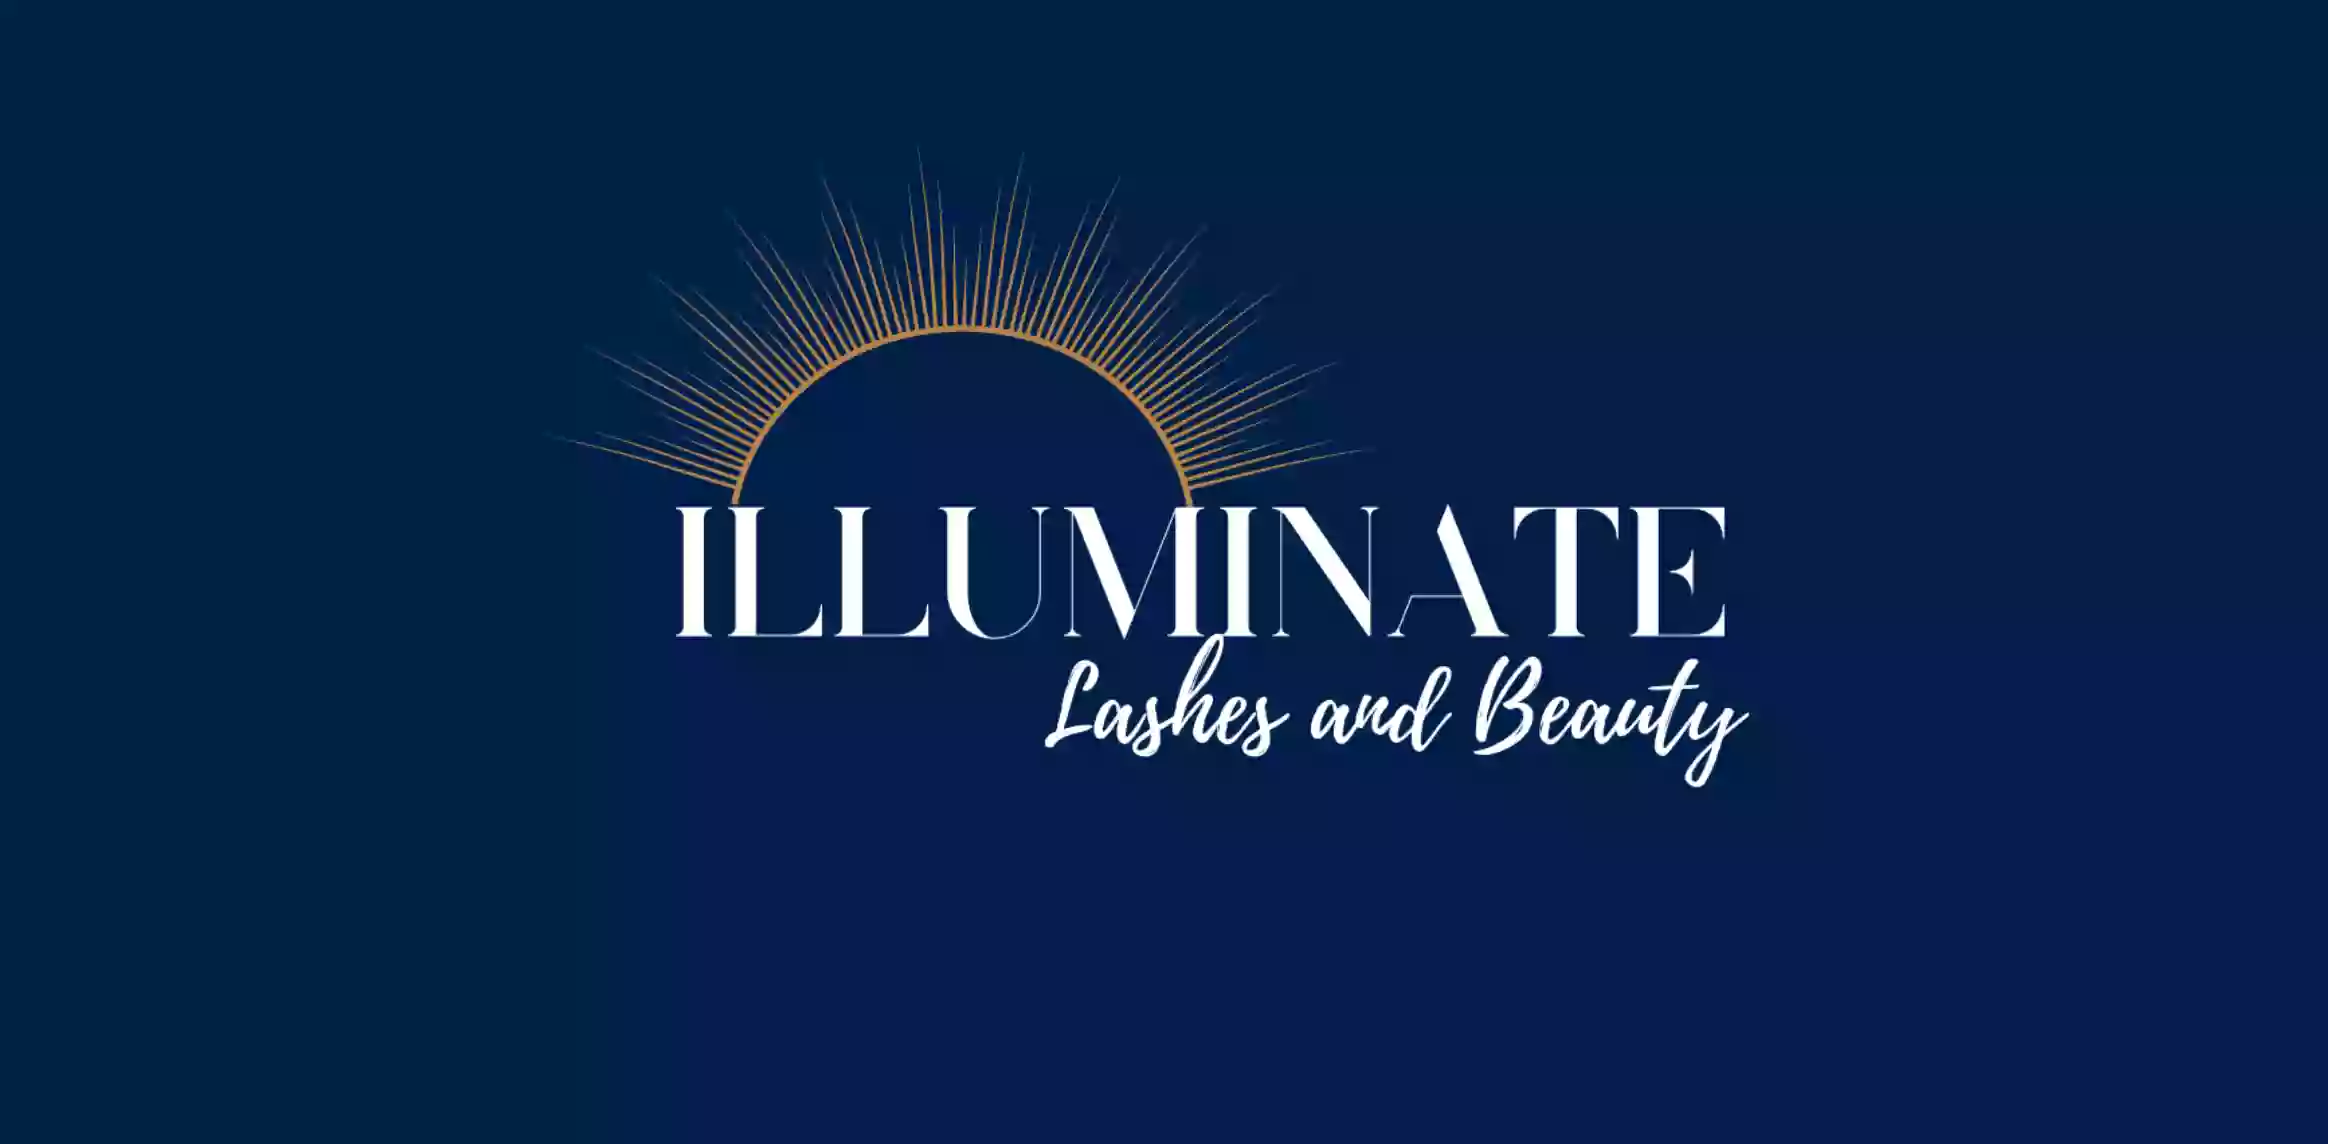 Illuminate Lashes and Beauty